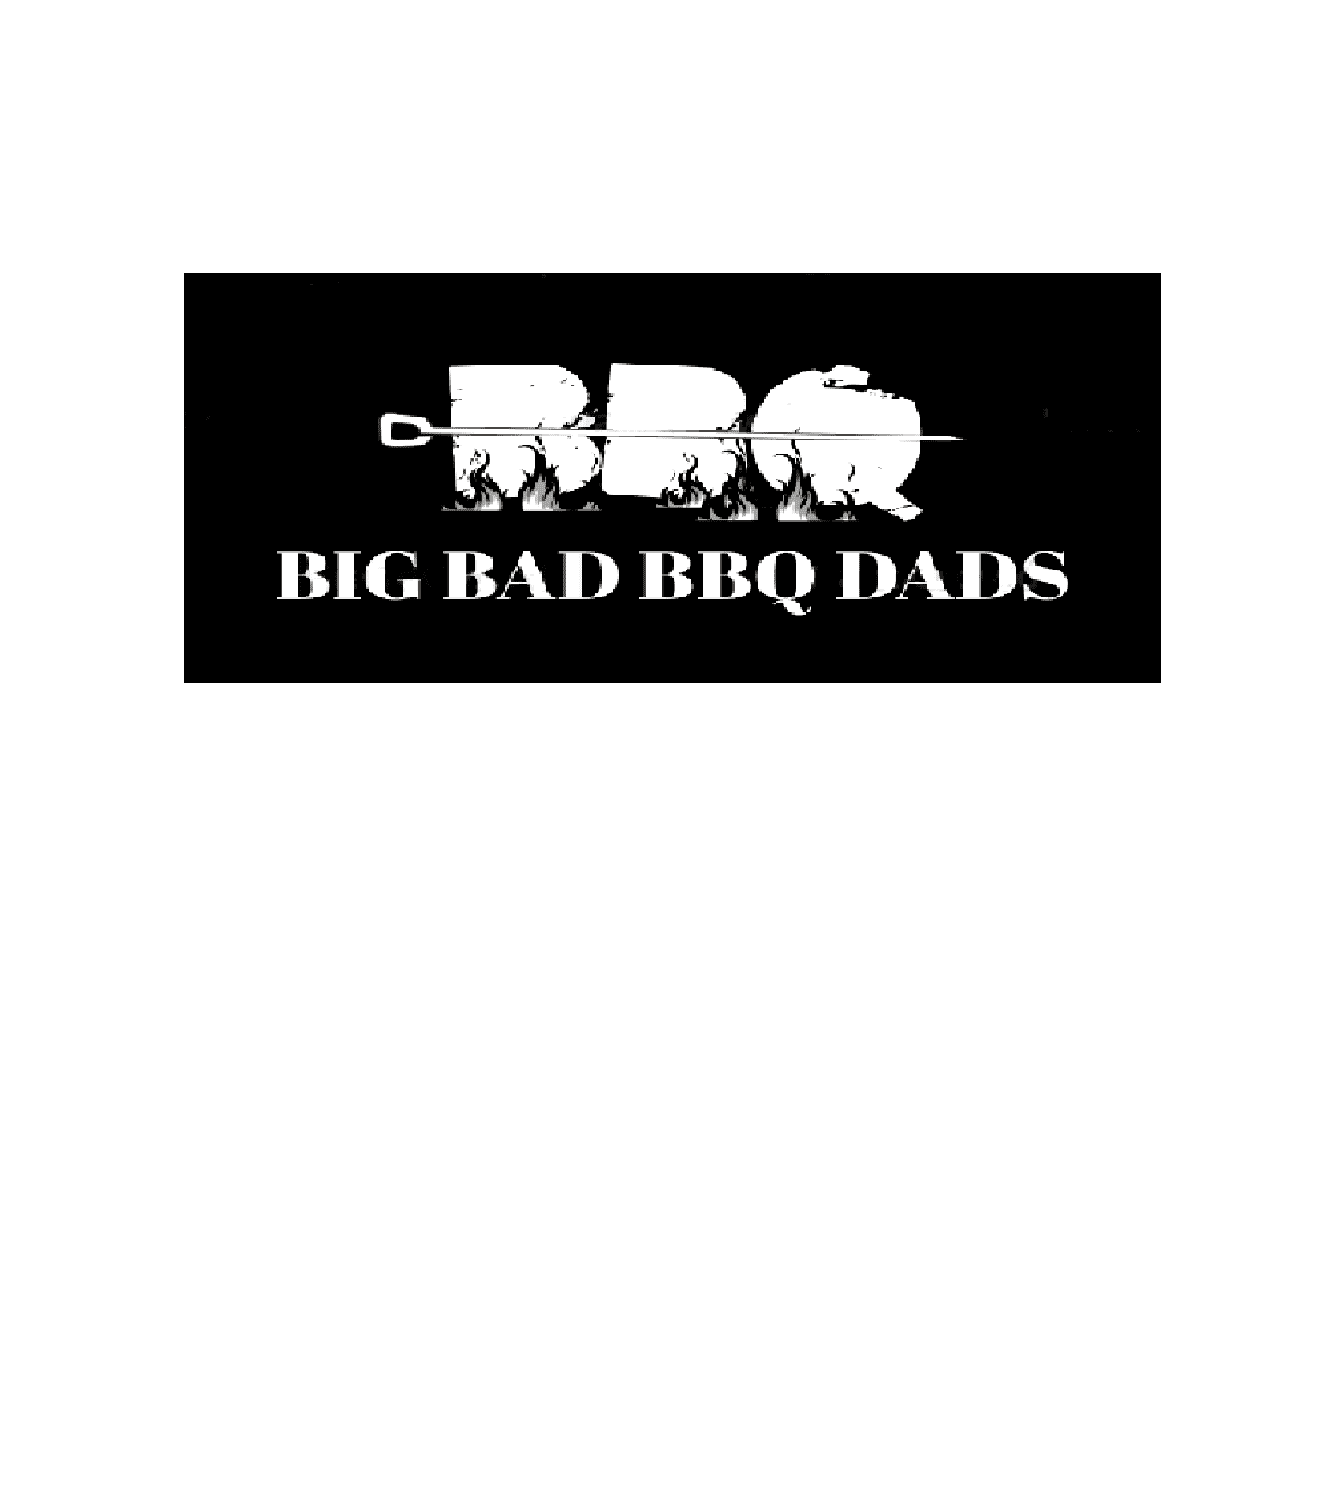 BIG BAD BBQ DADS